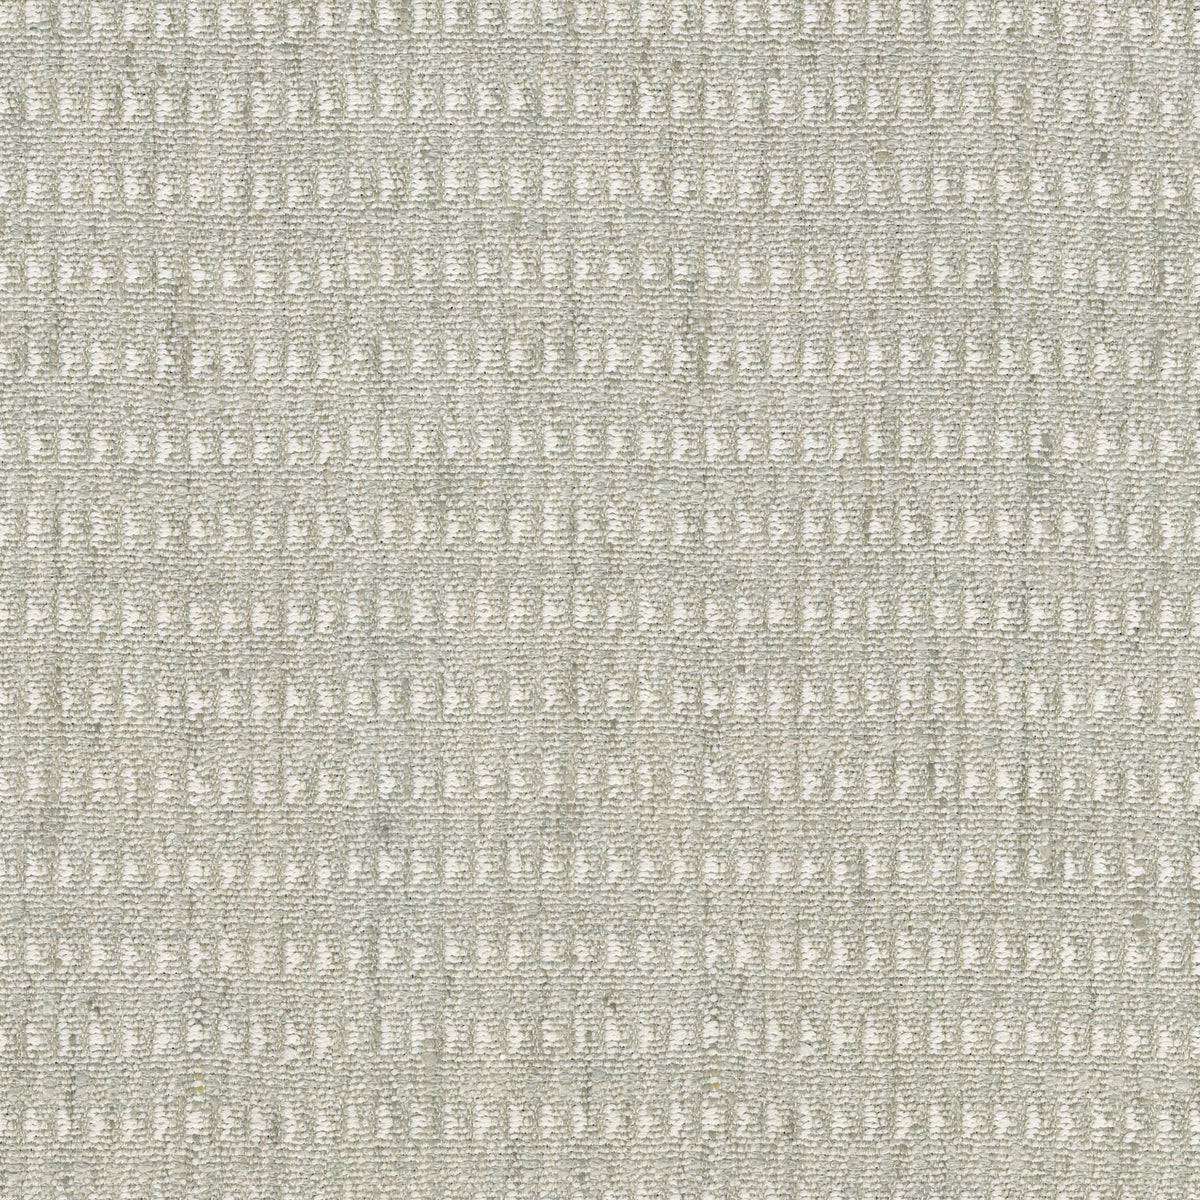 P/K Lifestyles Tabriz - Oyster 410276 Upholstery Fabric